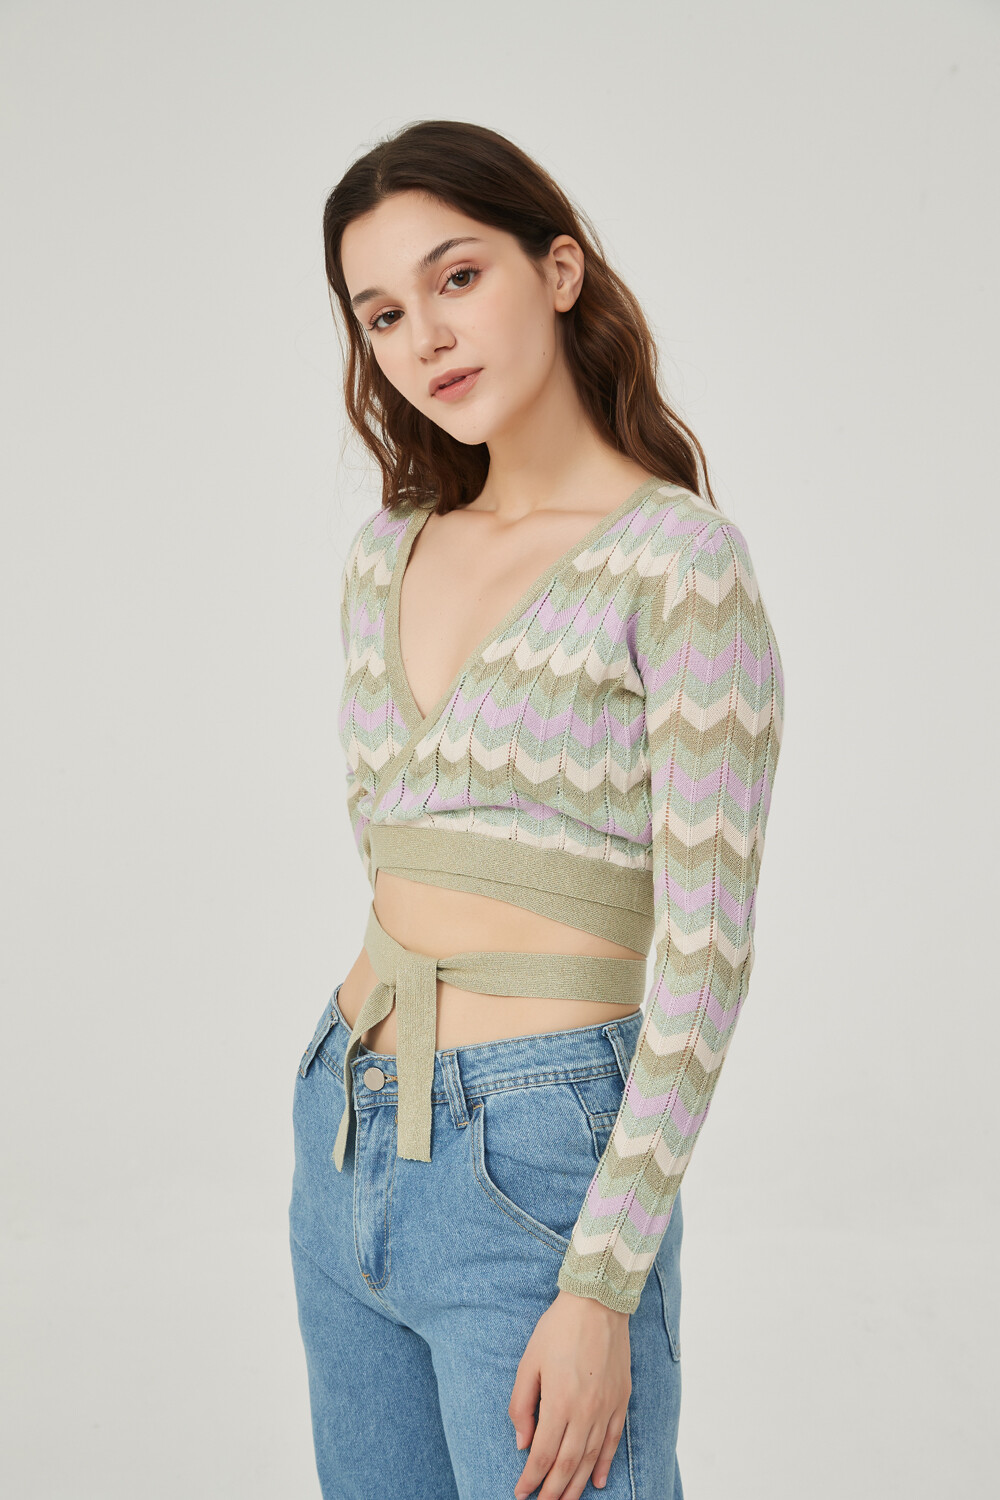 Sweater Vika Estampado 1